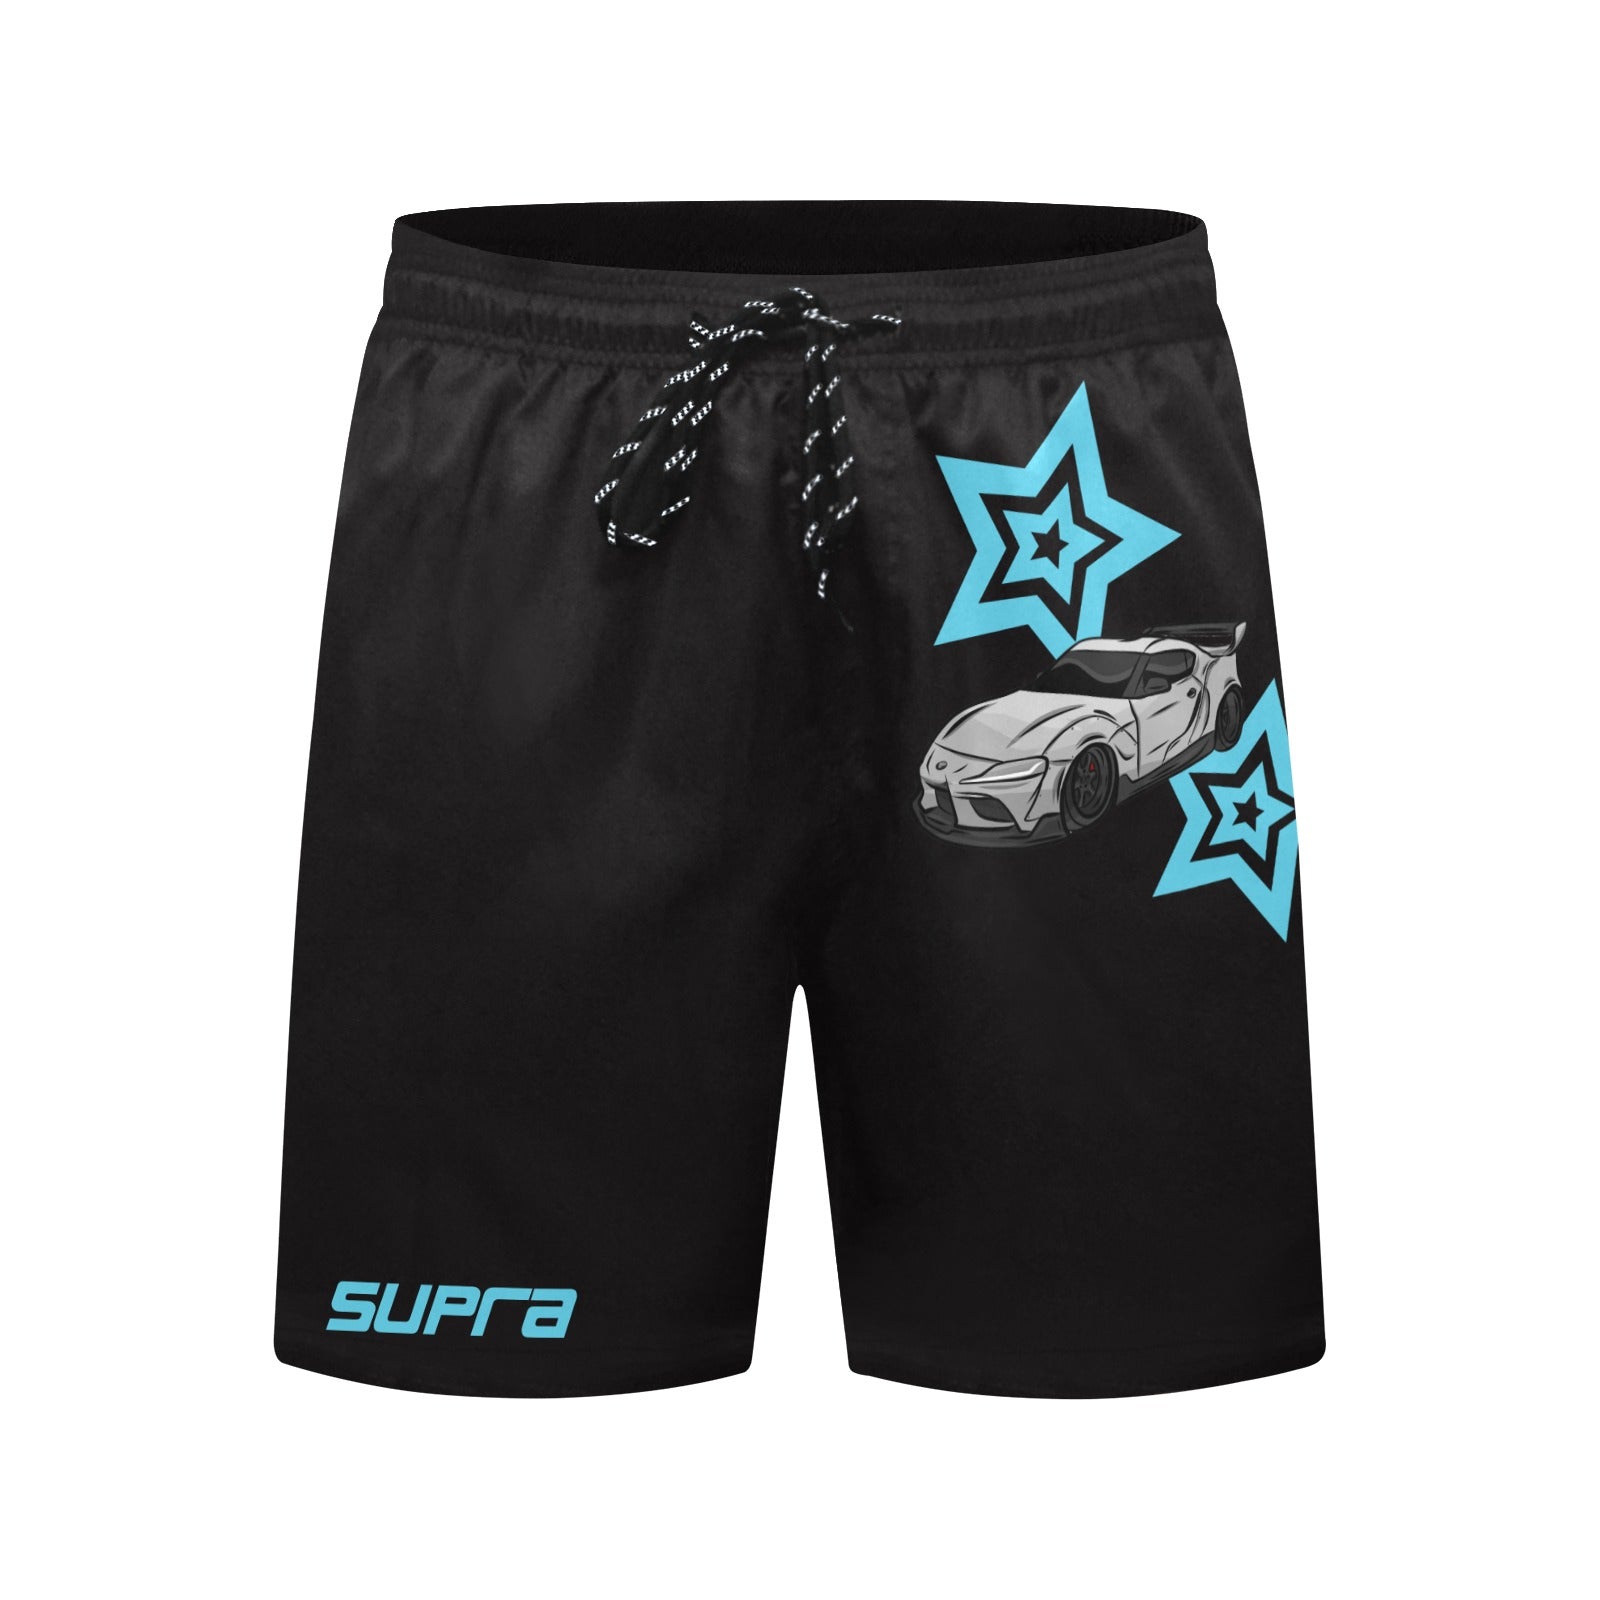 Bottom Swim Shorts Supra Black Blue Star